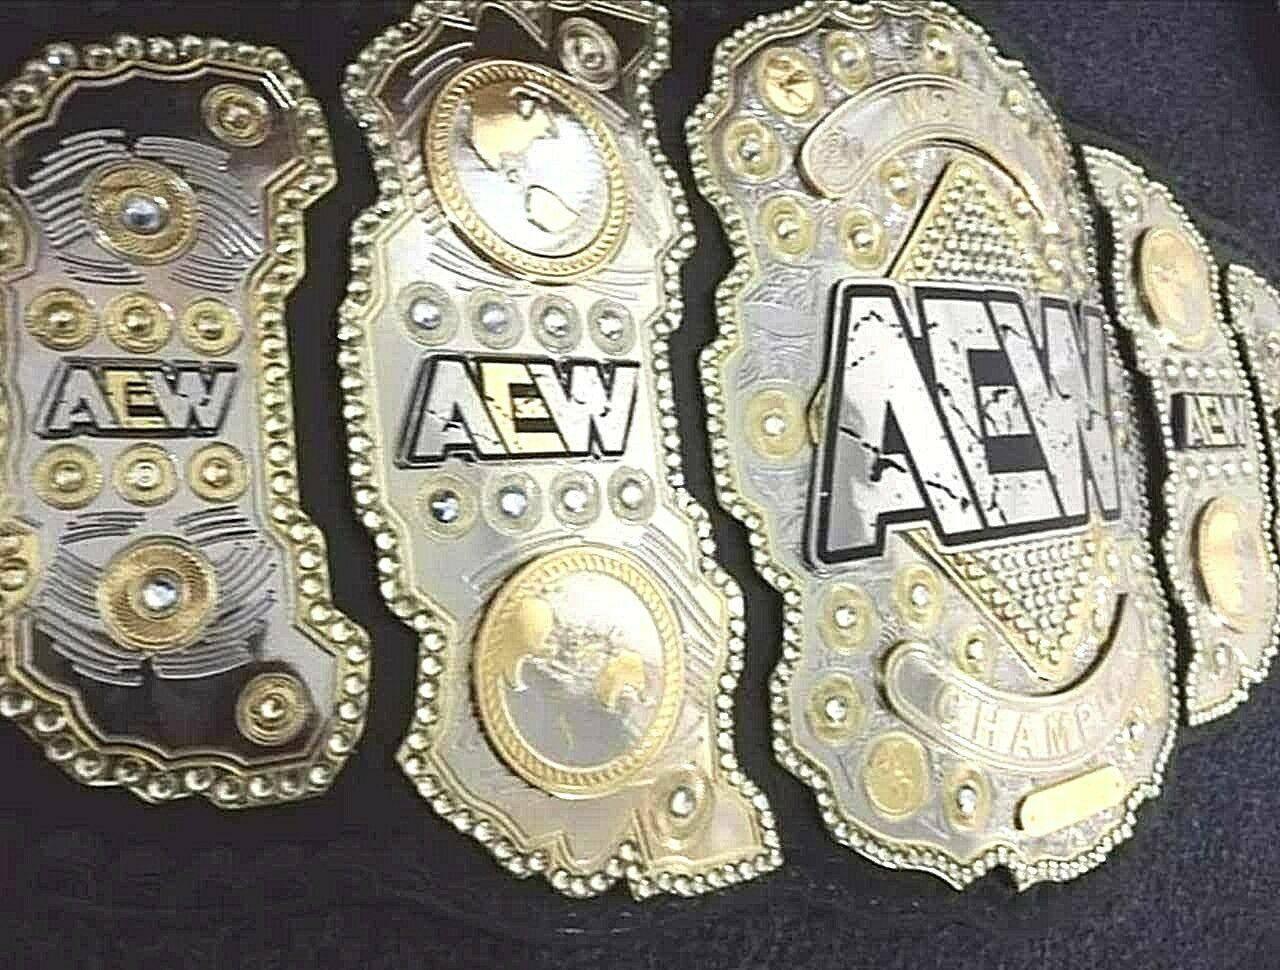 AEW Heavyweight Brass Championship Belt Replica